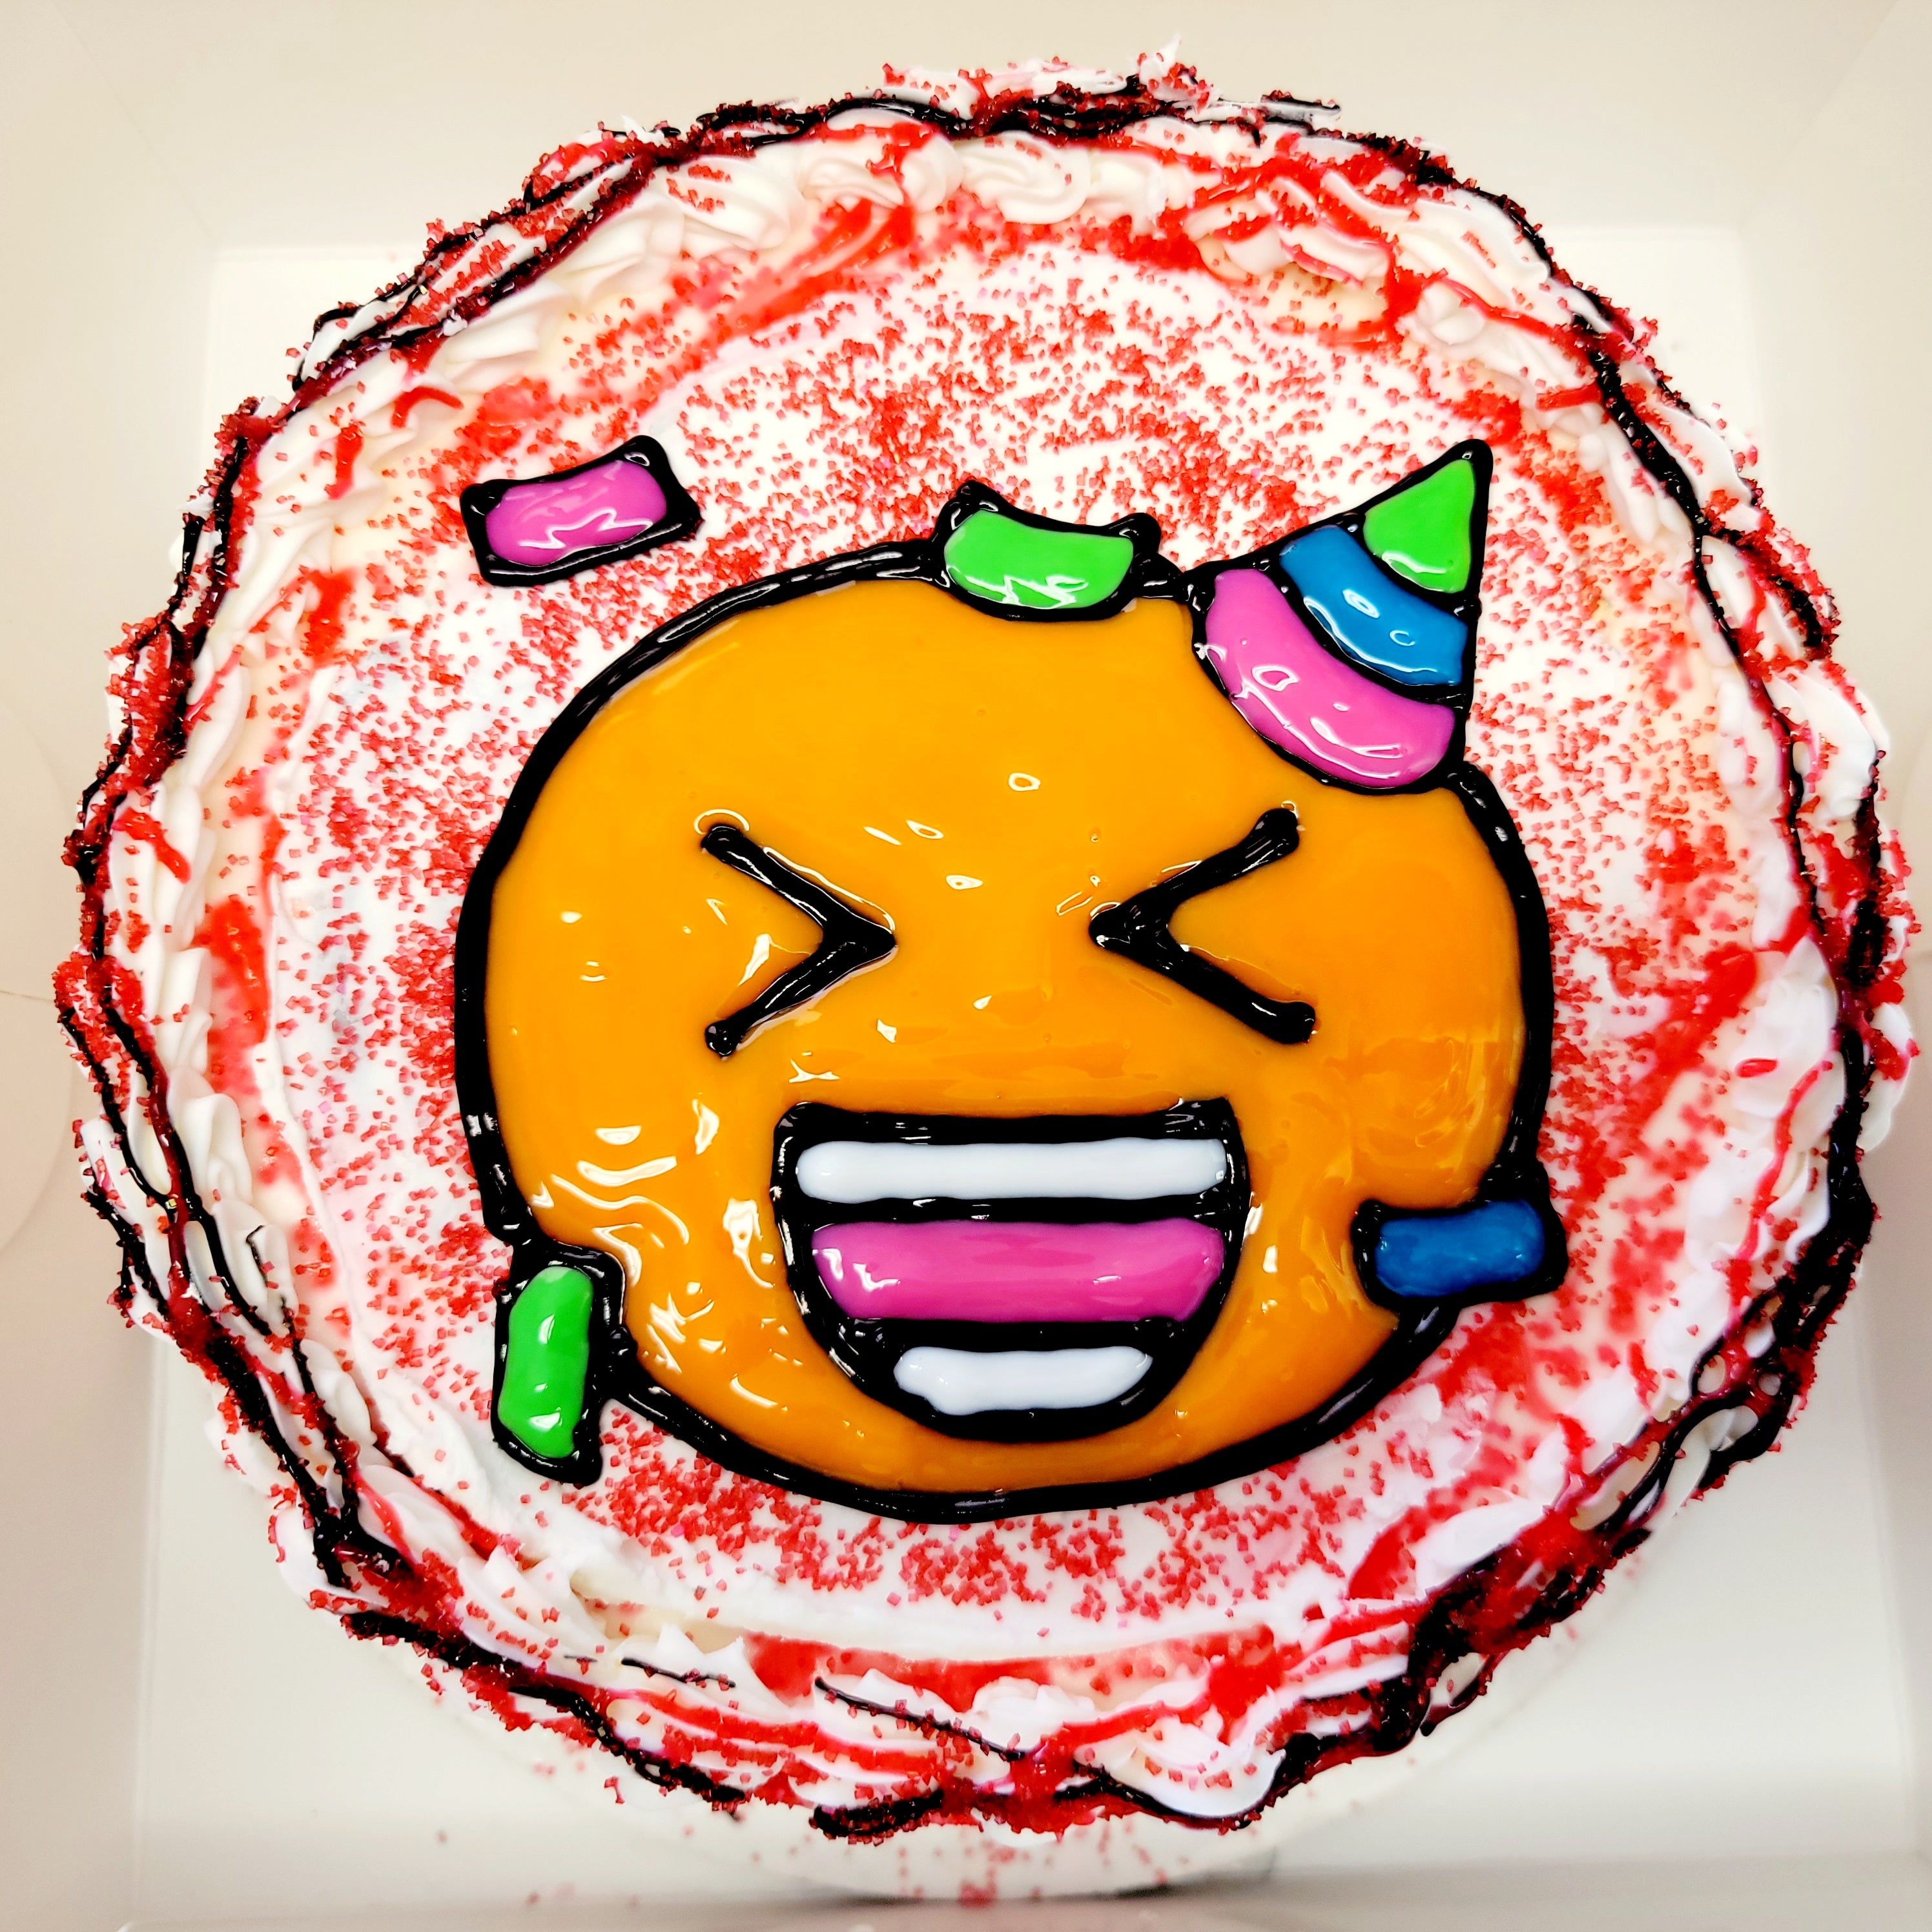 6 cake emoji ideas for a very Gen Z birthday party | Kidspot